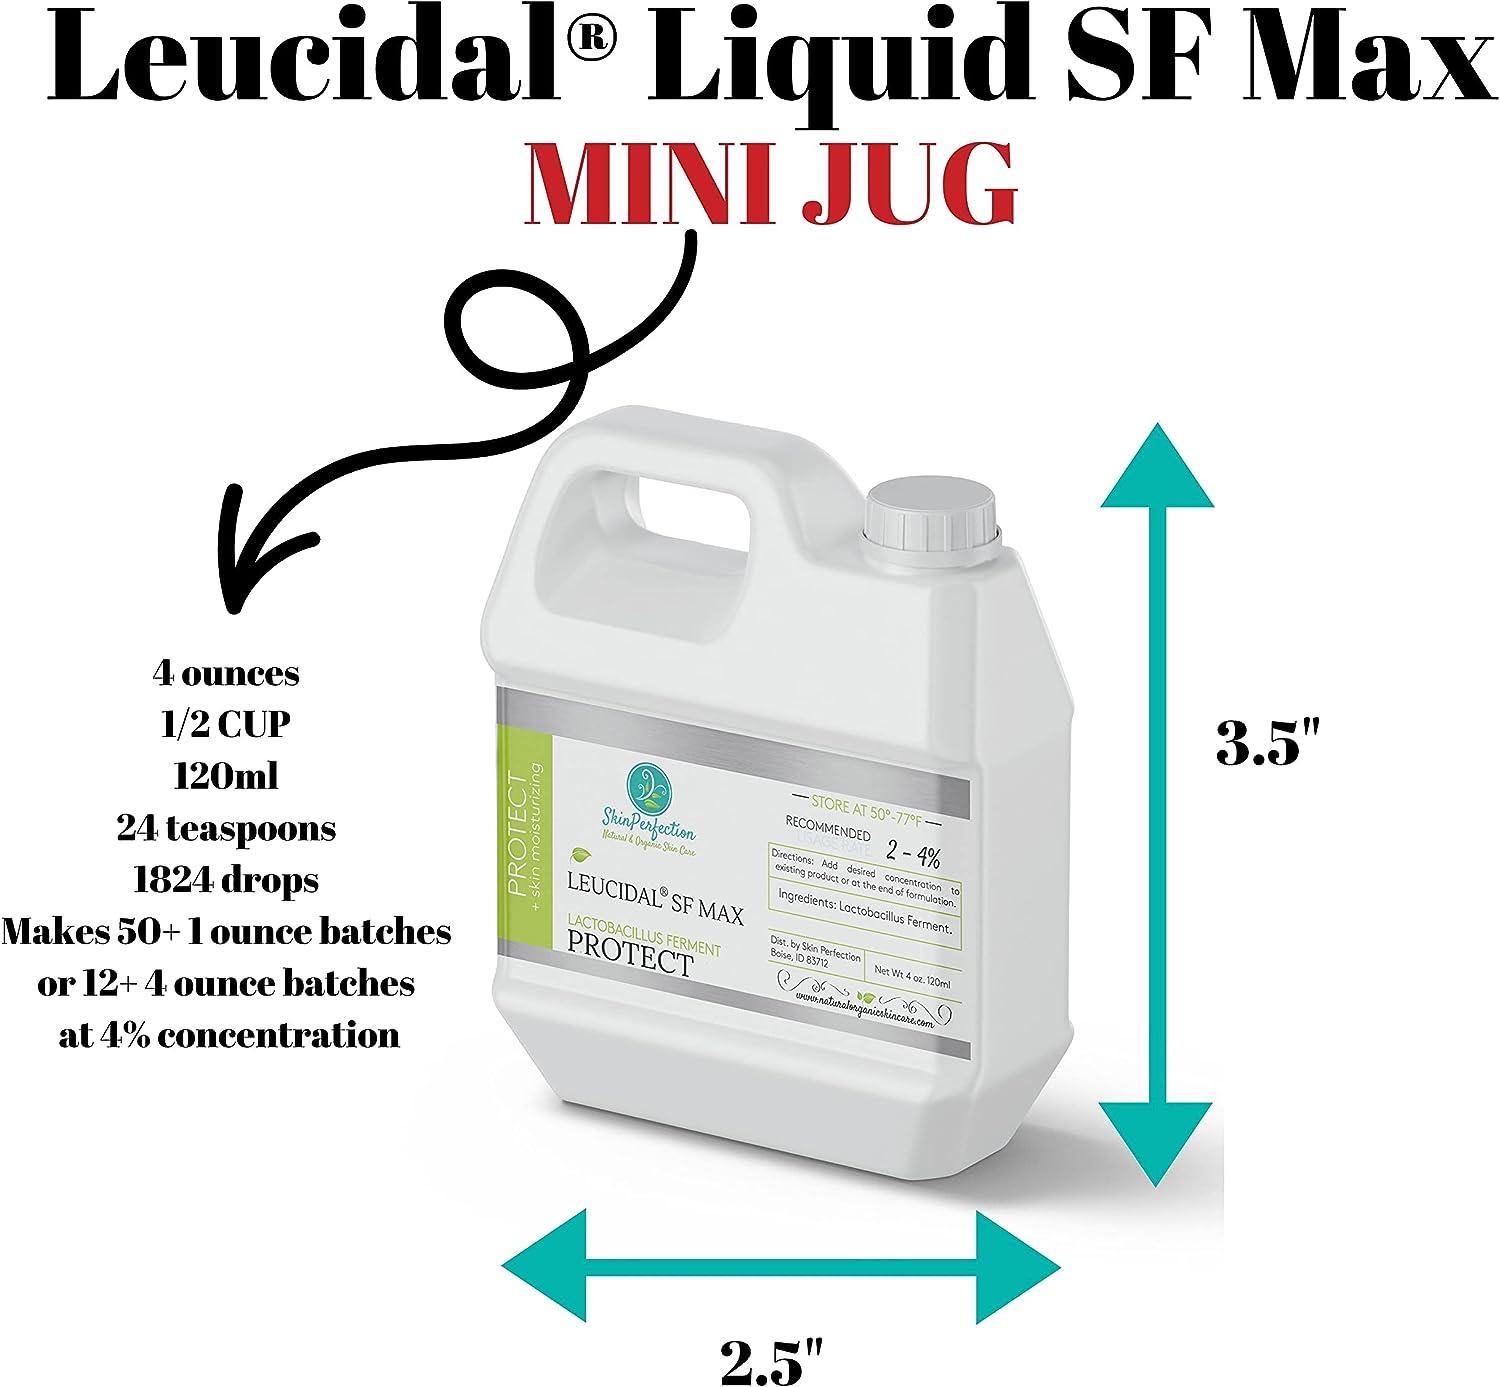 Leucidal SF Complete Salicylic Free Natural Protection Lactobacillus for DIY Anti-Aging Vitamin C Hyaluronic Acid Facial Serums Cosmetics Skin